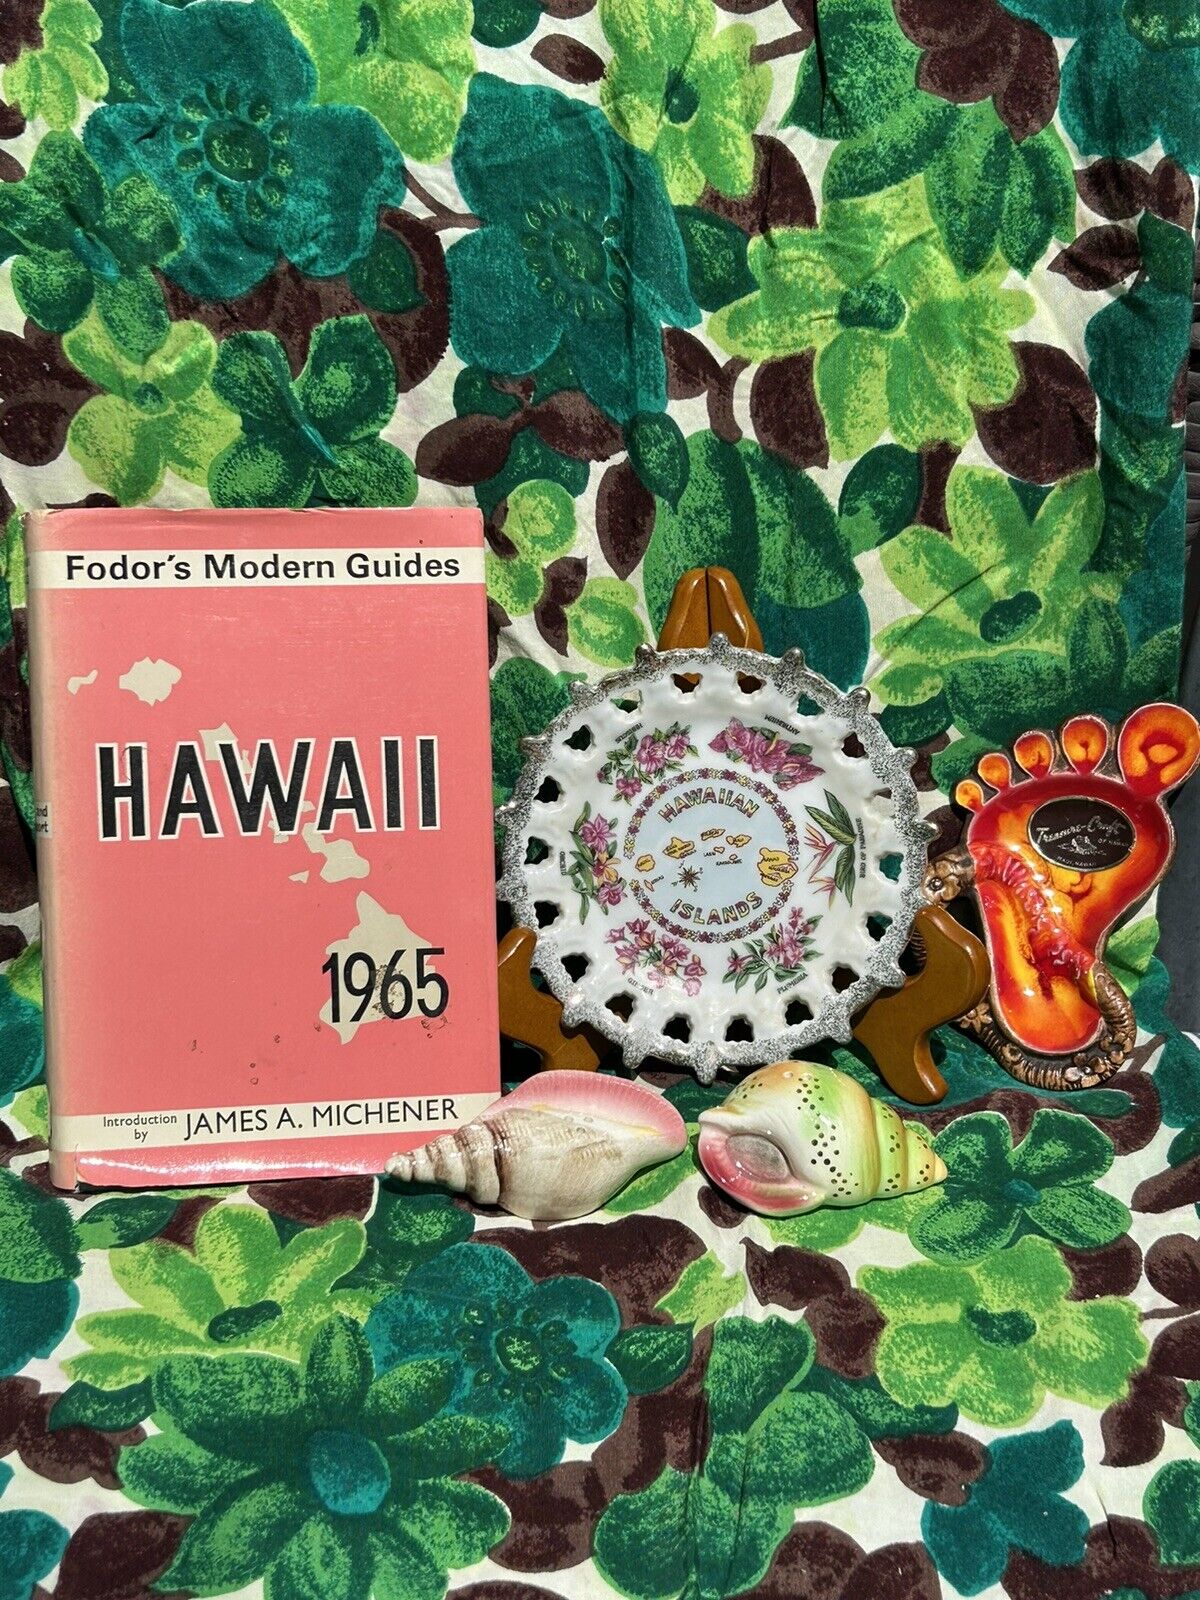 VTG Hawaiian Lot 5 items, Fodor’s ‘65, Treasure Craft Ceramic, Plate, S&P Shaker